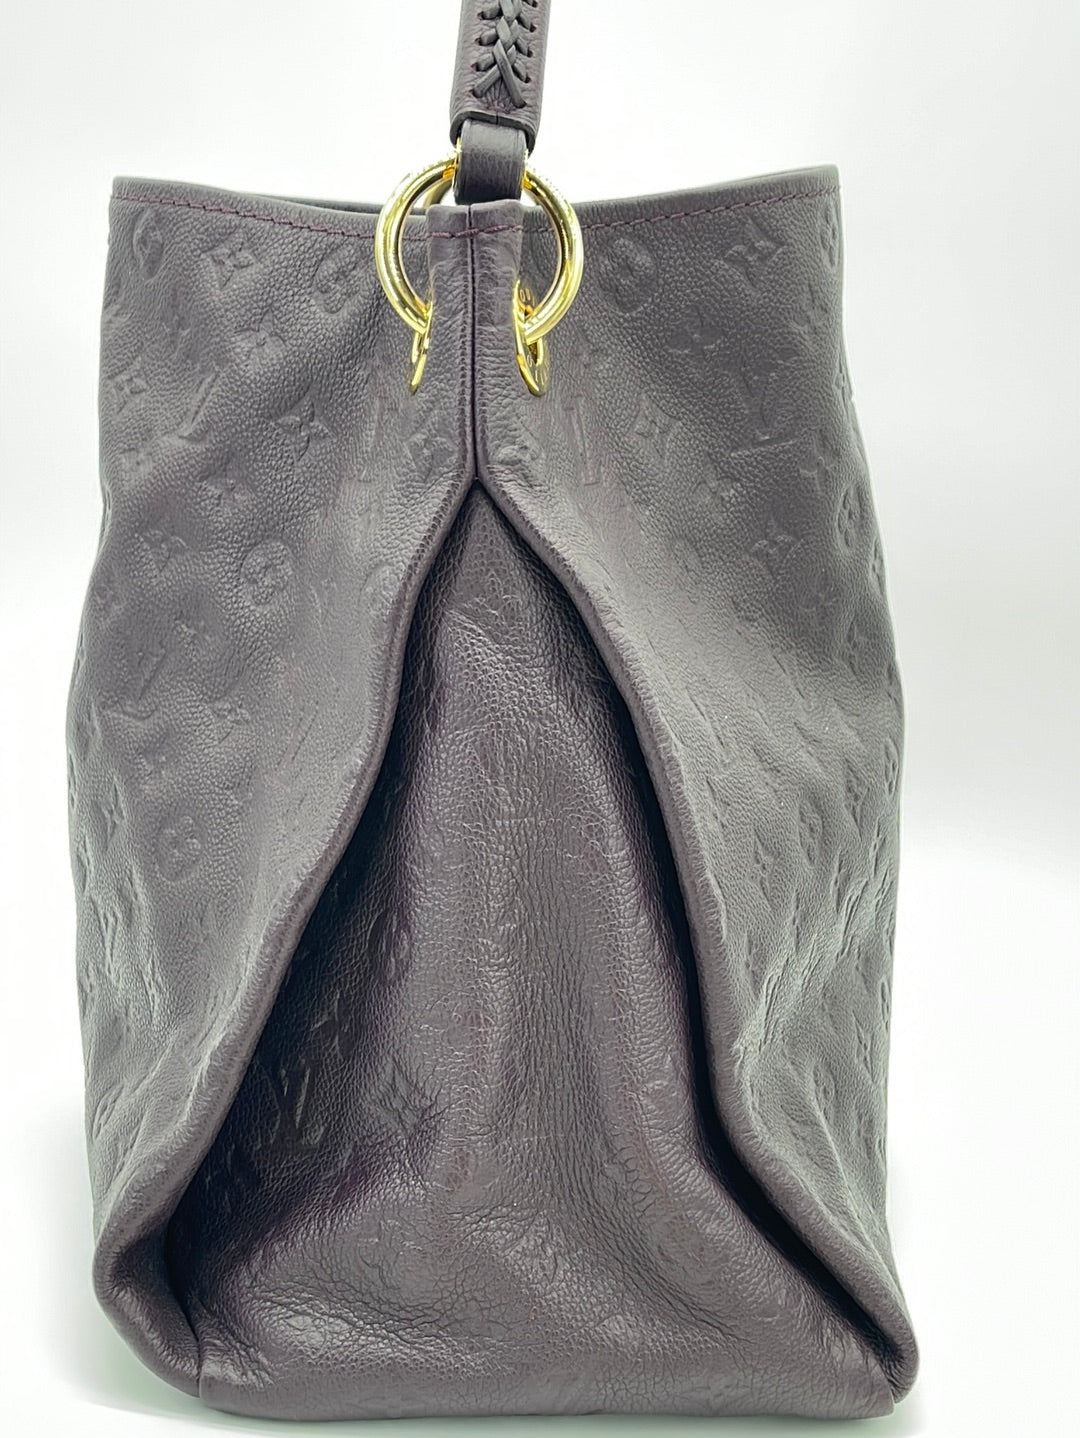 PRELOVED Louis Vuitton Artsy Purple Monogram Empreinte Leather MM Handbag  CA1112 031523